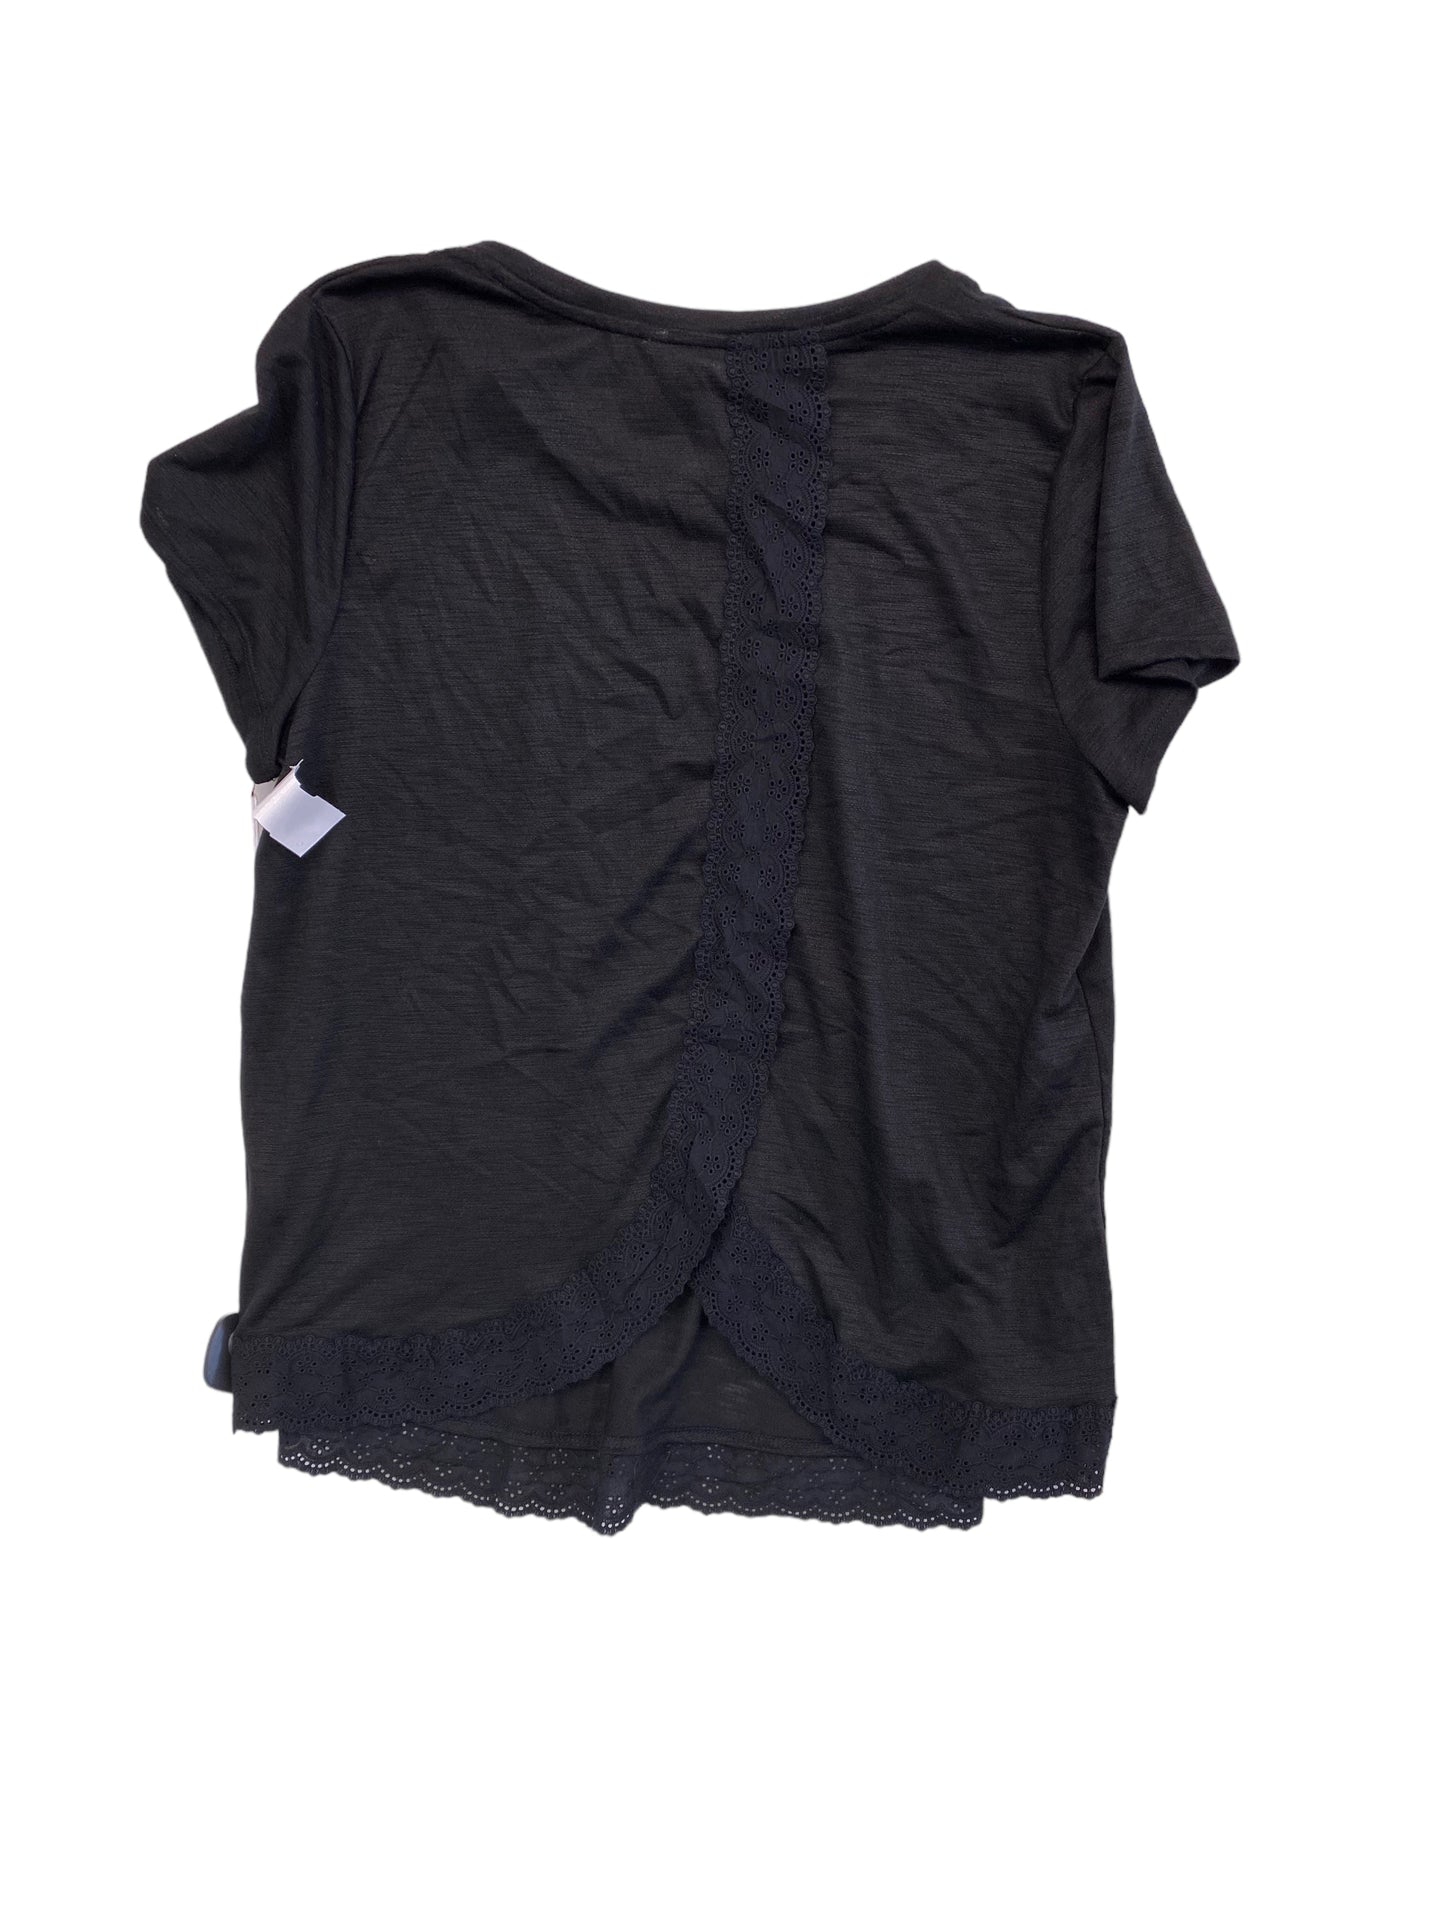 Black Top Short Sleeve Lc Lauren Conrad, Size Xl